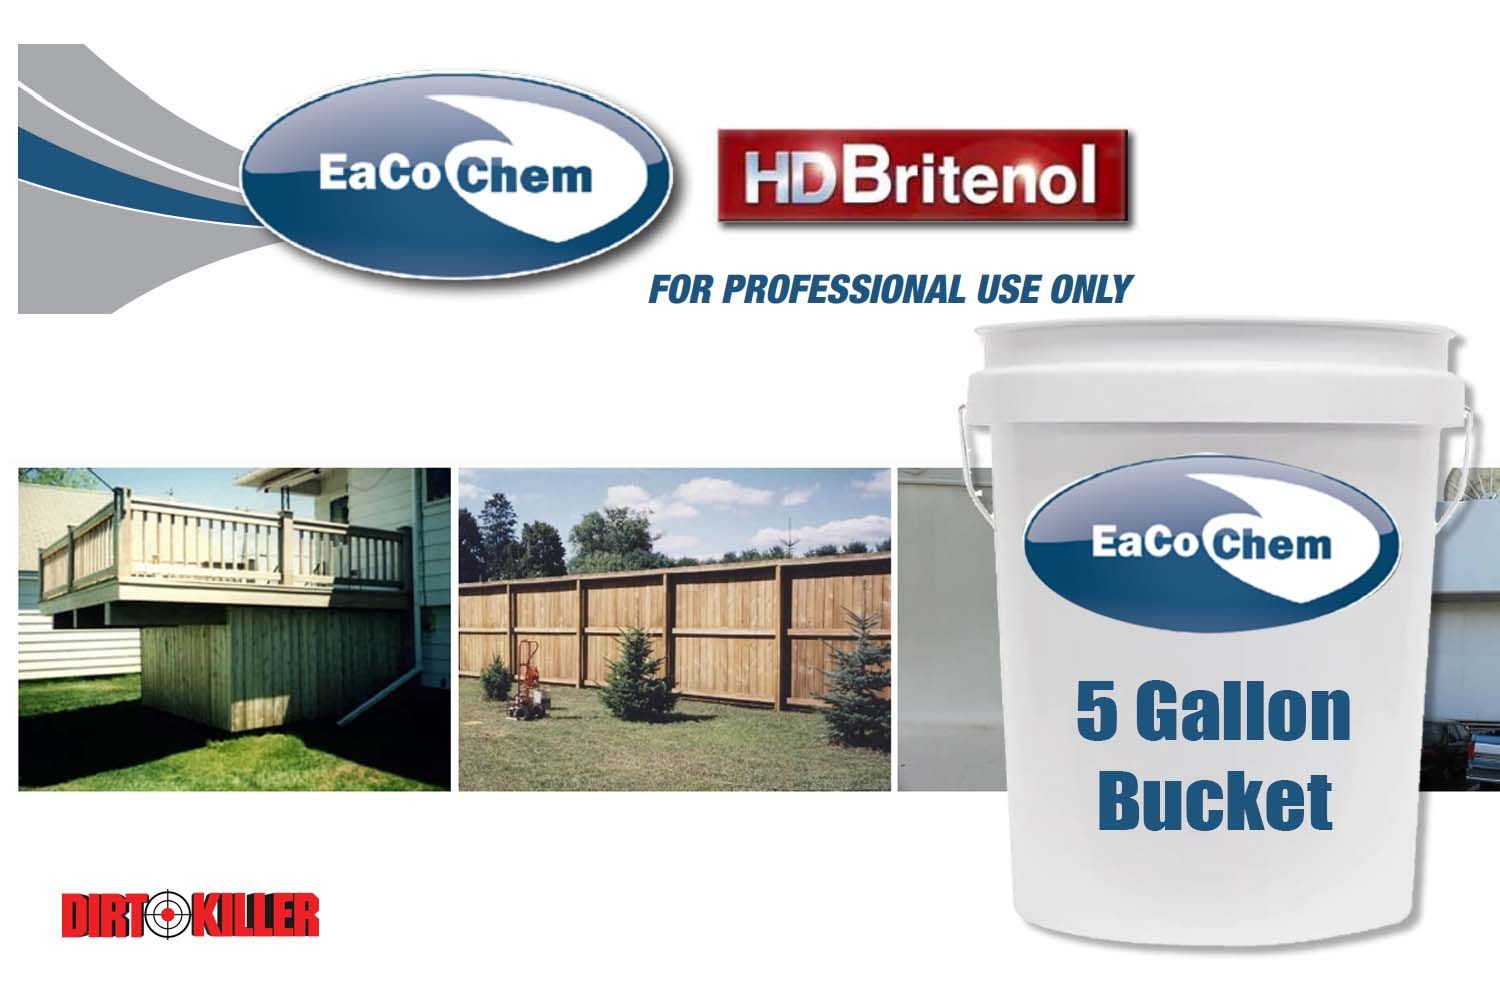 Eaco Chem HD Britenol - All-purpose cleaner